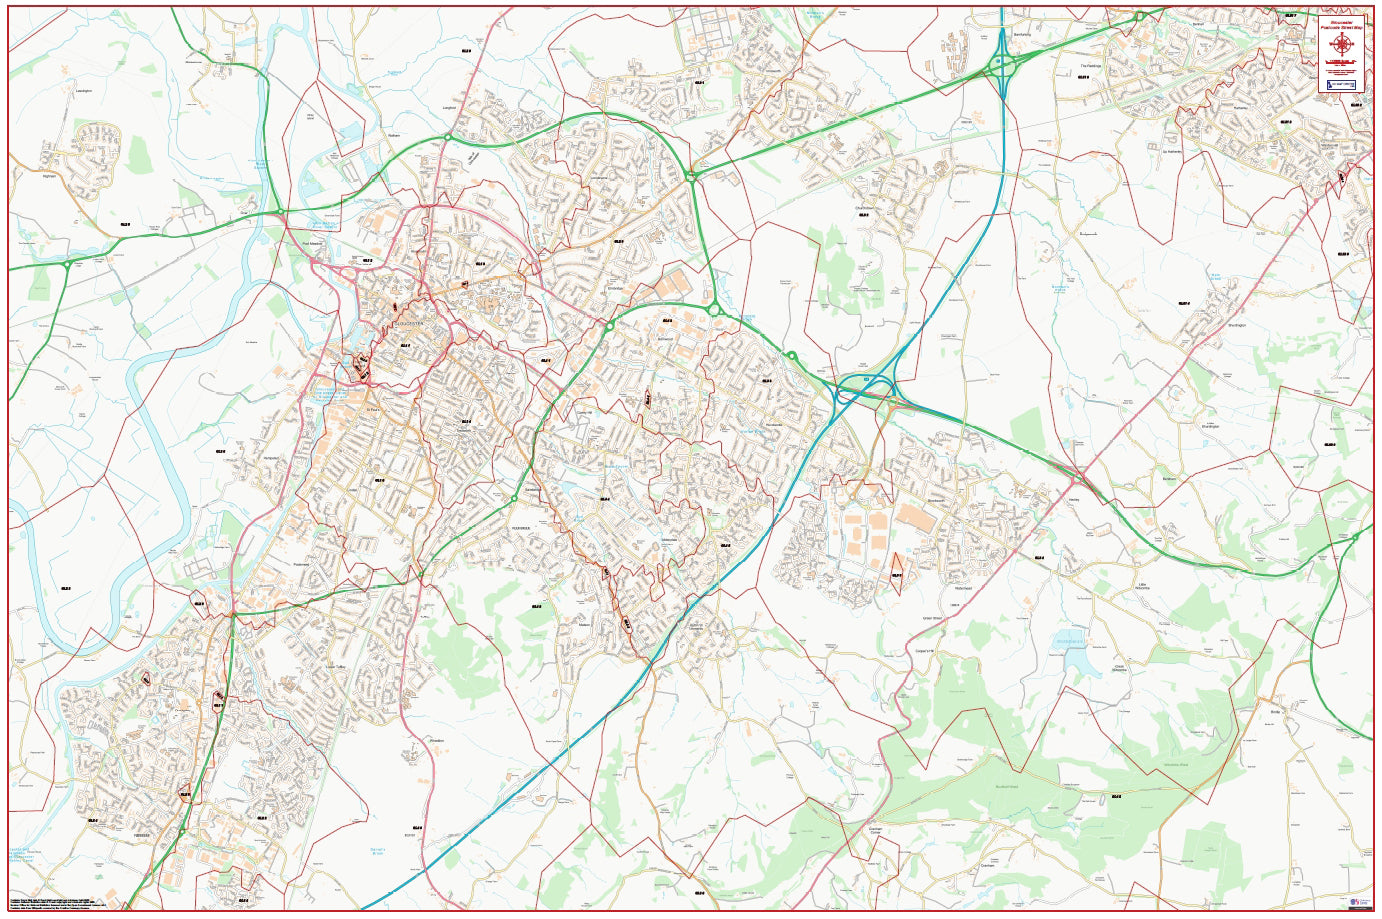 Central Gloucester Postcode City Street Map - Digital Download